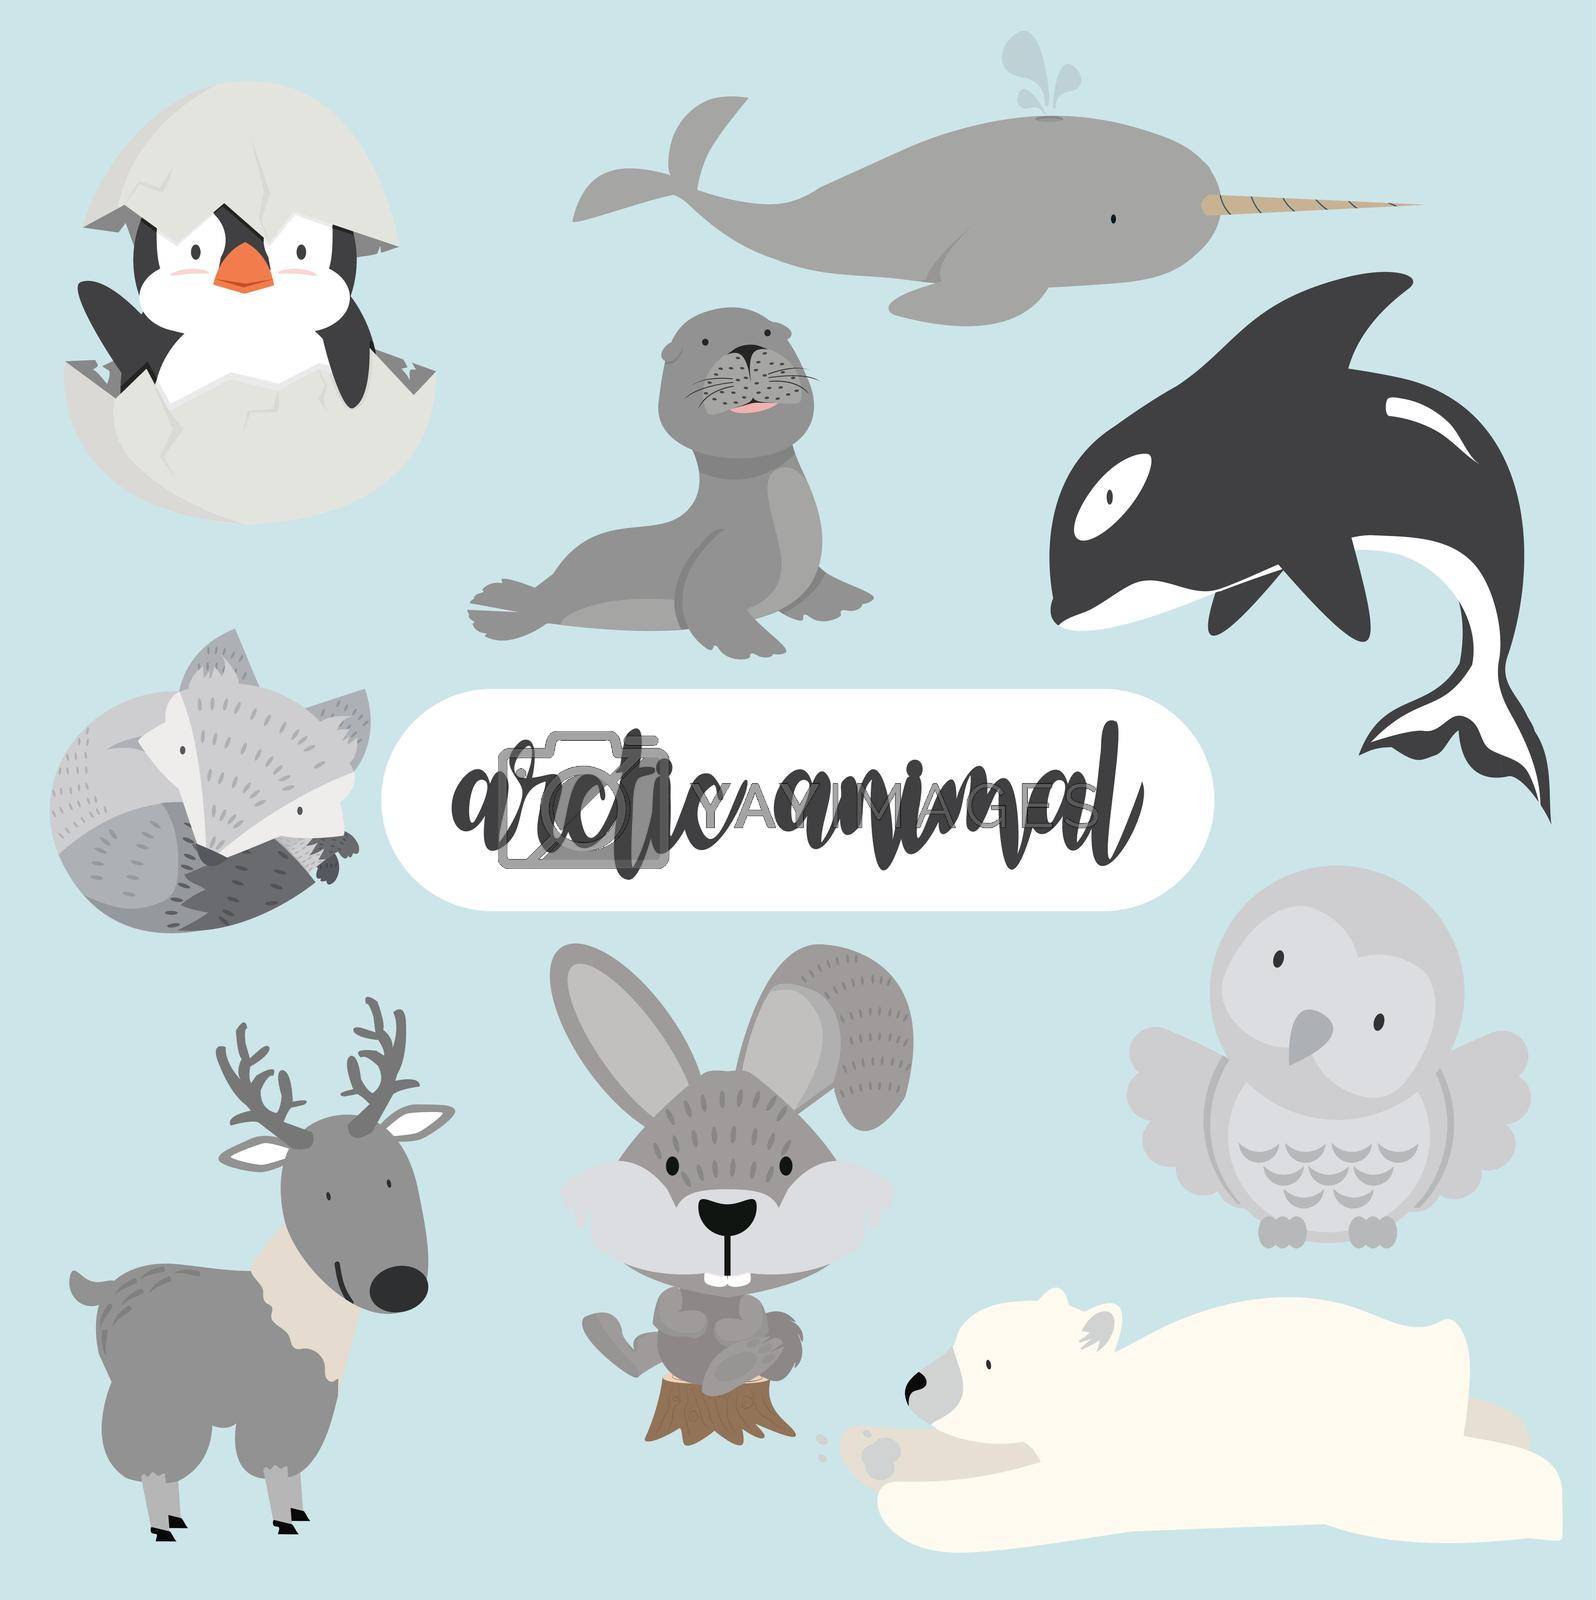 Arctic animals  cartoon Flat style character illustration set